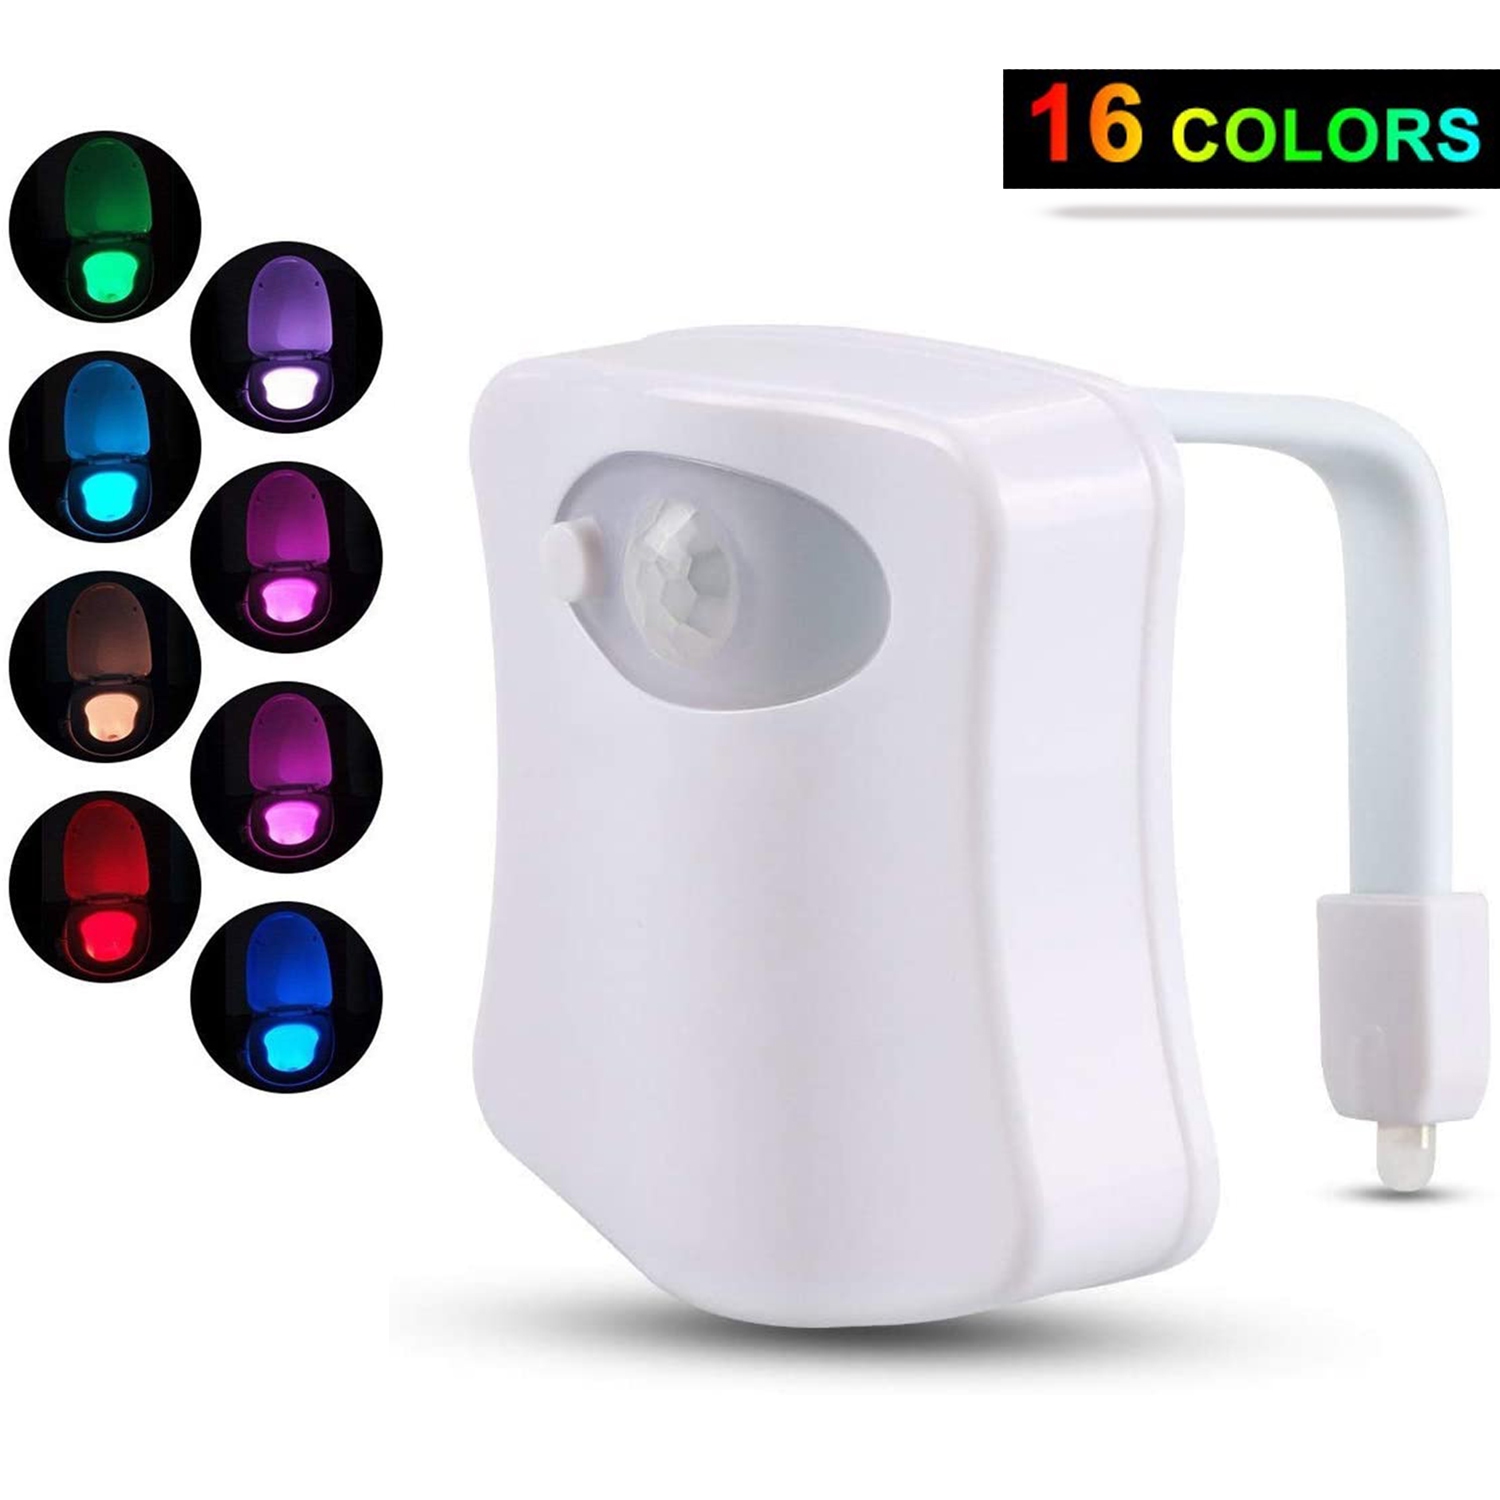 ISTAR Light Motion Activated Toilet Night Light Toilet Nightlight Sensor LED 16 Color Modes Toilet Bowl Seat Lamp for Bathroom Potty Training - (2 Pack)